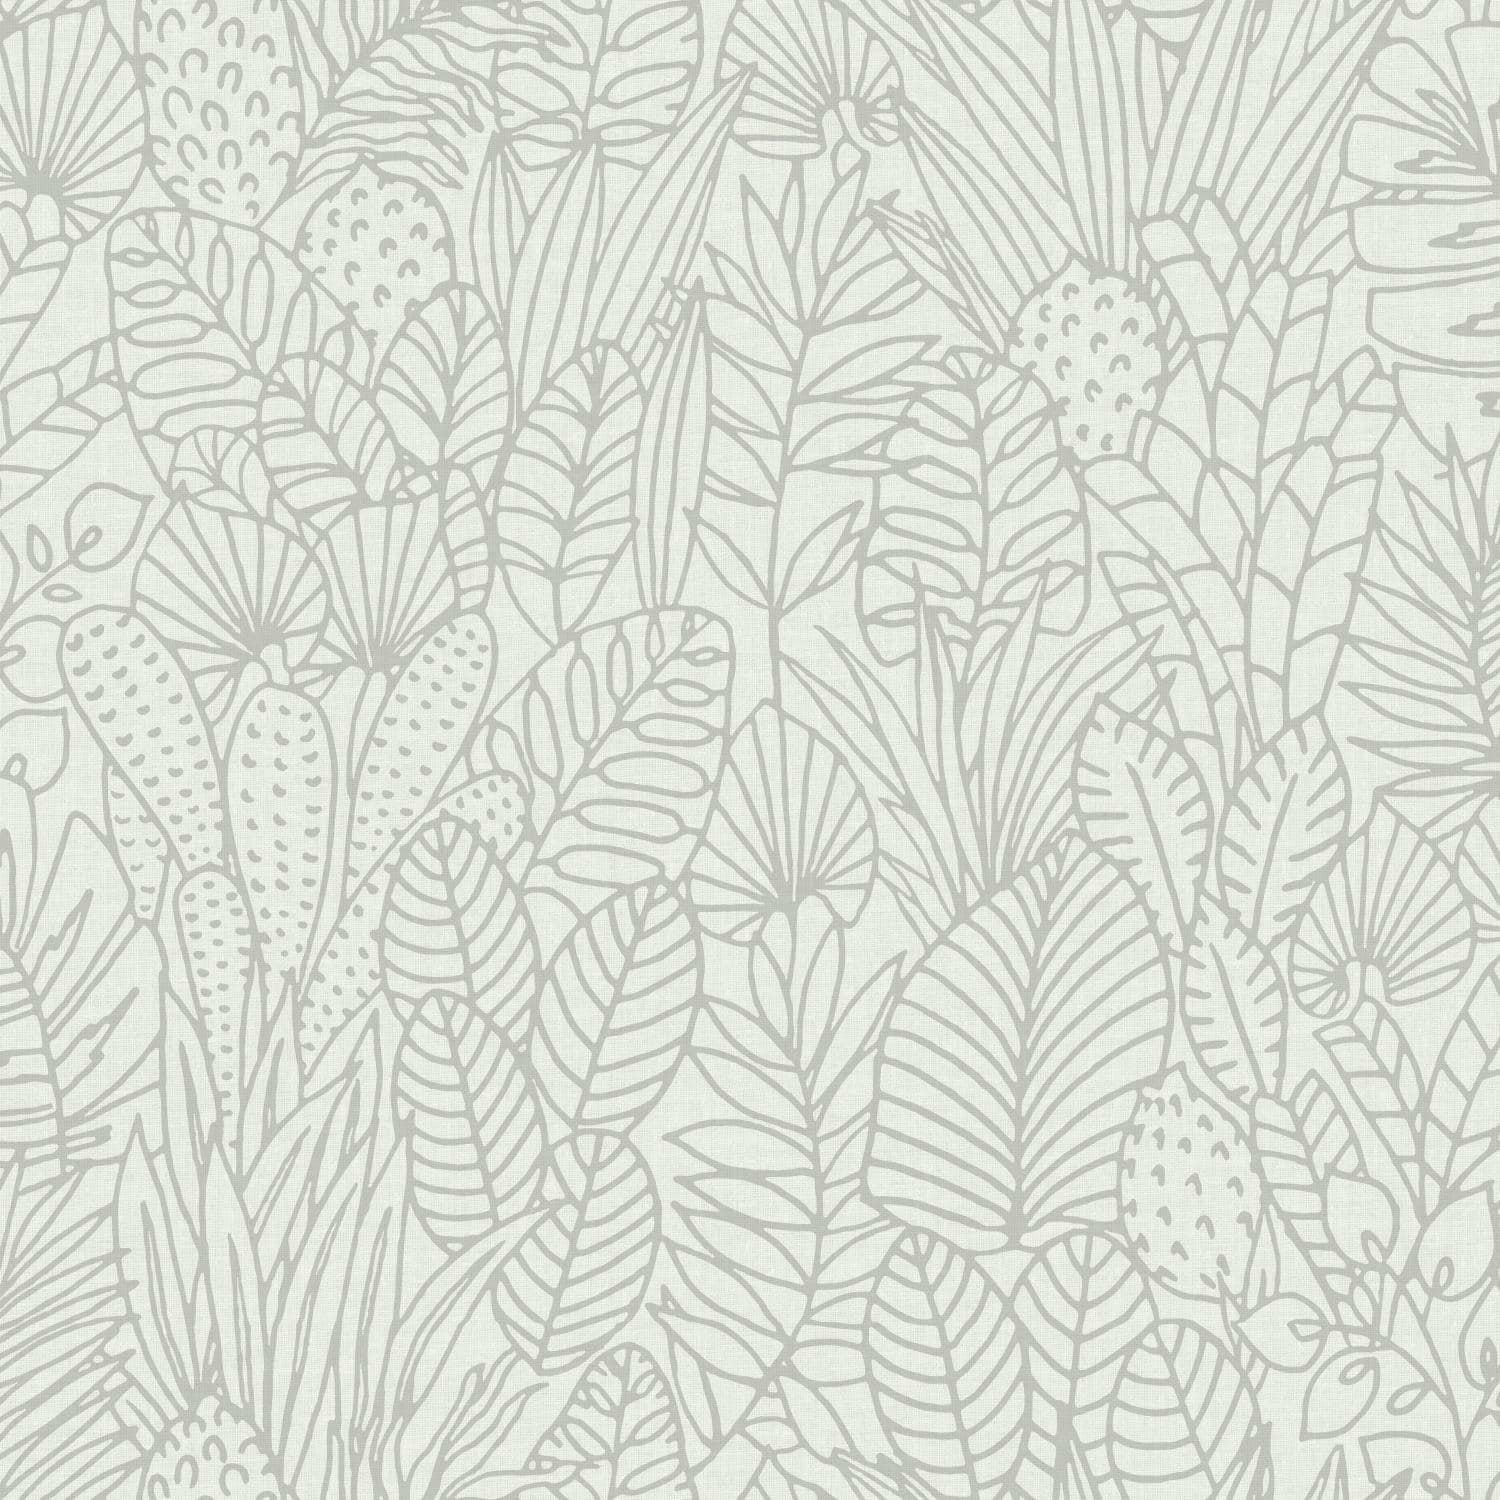 RoomMates Tropical Leaves Sketch Peel &#x26; Stick Wallpaper